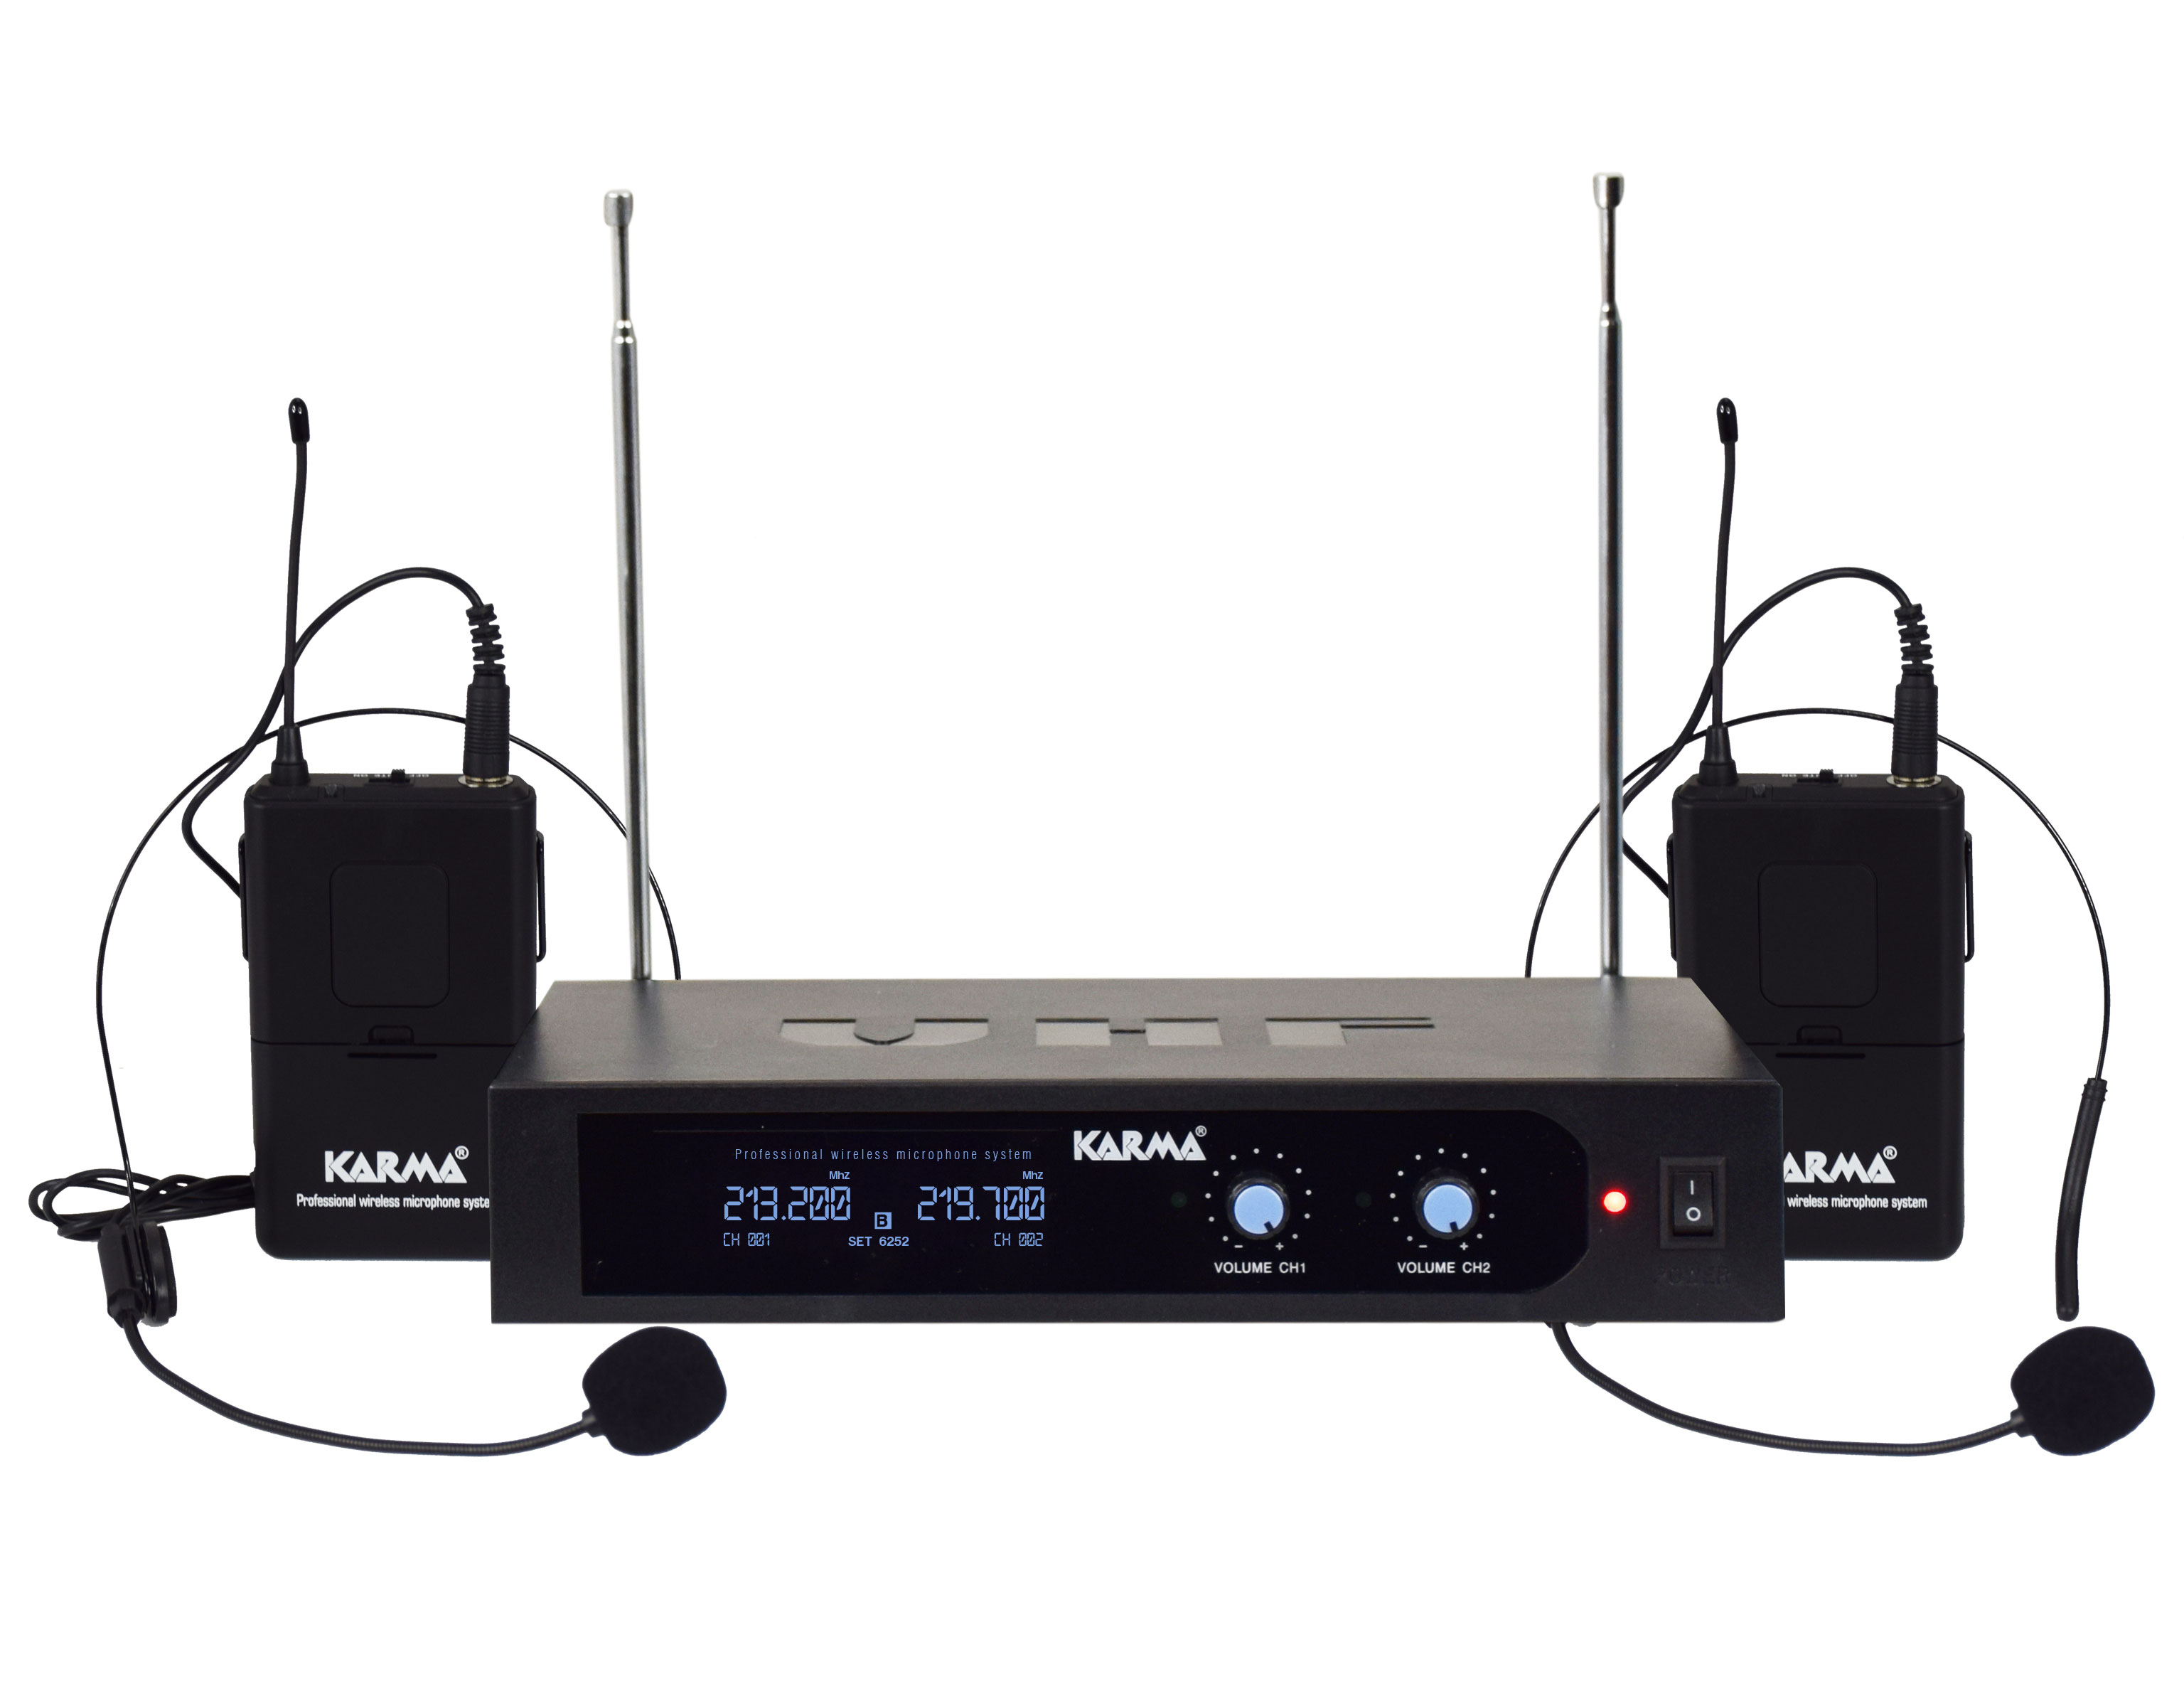 Karma-SET-6252LAV-B-Doppio-radiomicrofono-ad-archetto-VHF-sku-760002467